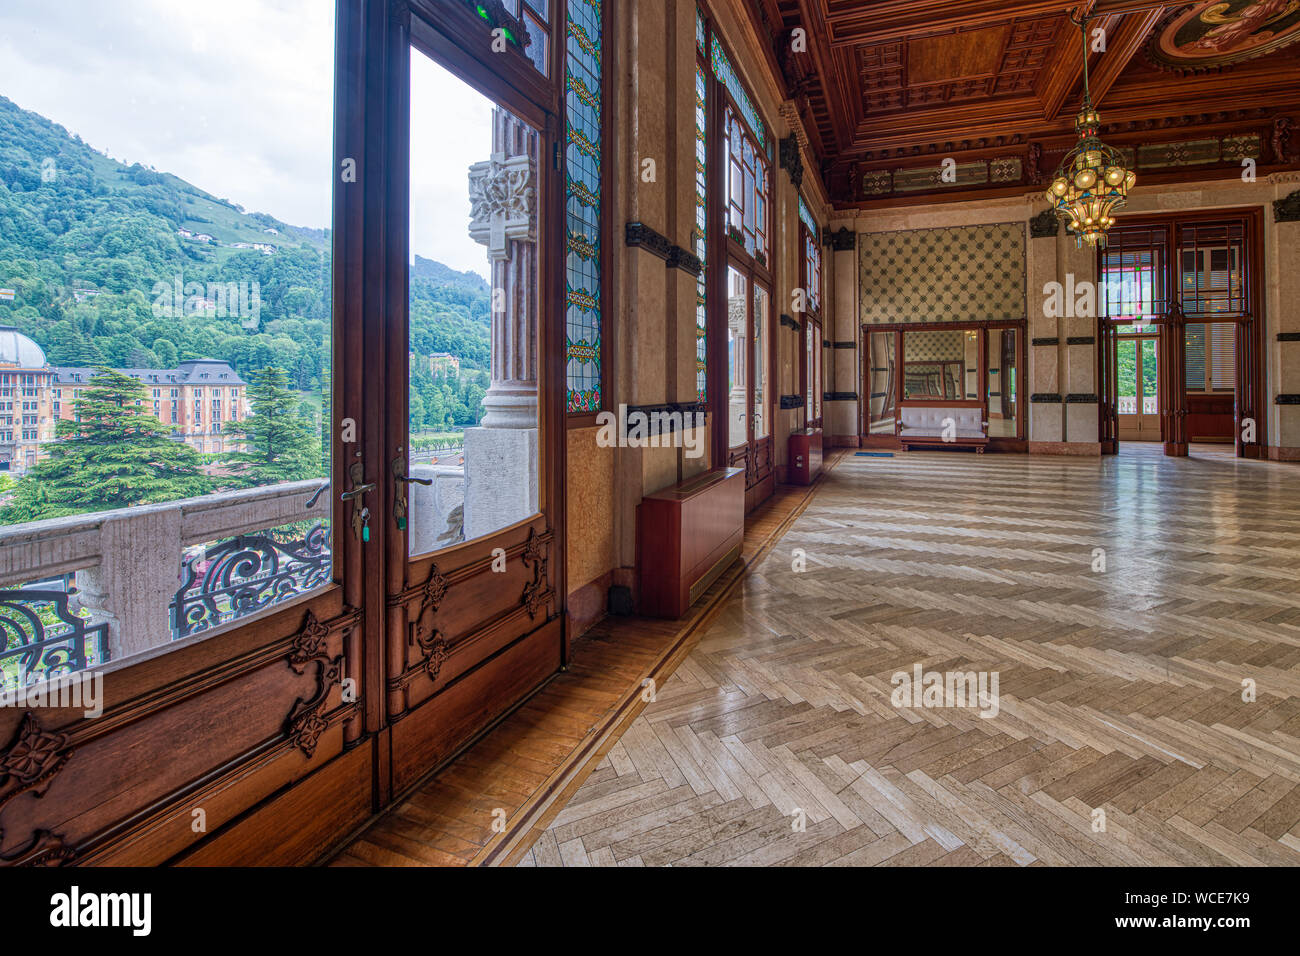 San Pellegrino terme, Italy - may 16, 2019: Interior of the San Pellegrino Terme casino. old liberty gambling house Stock Photo